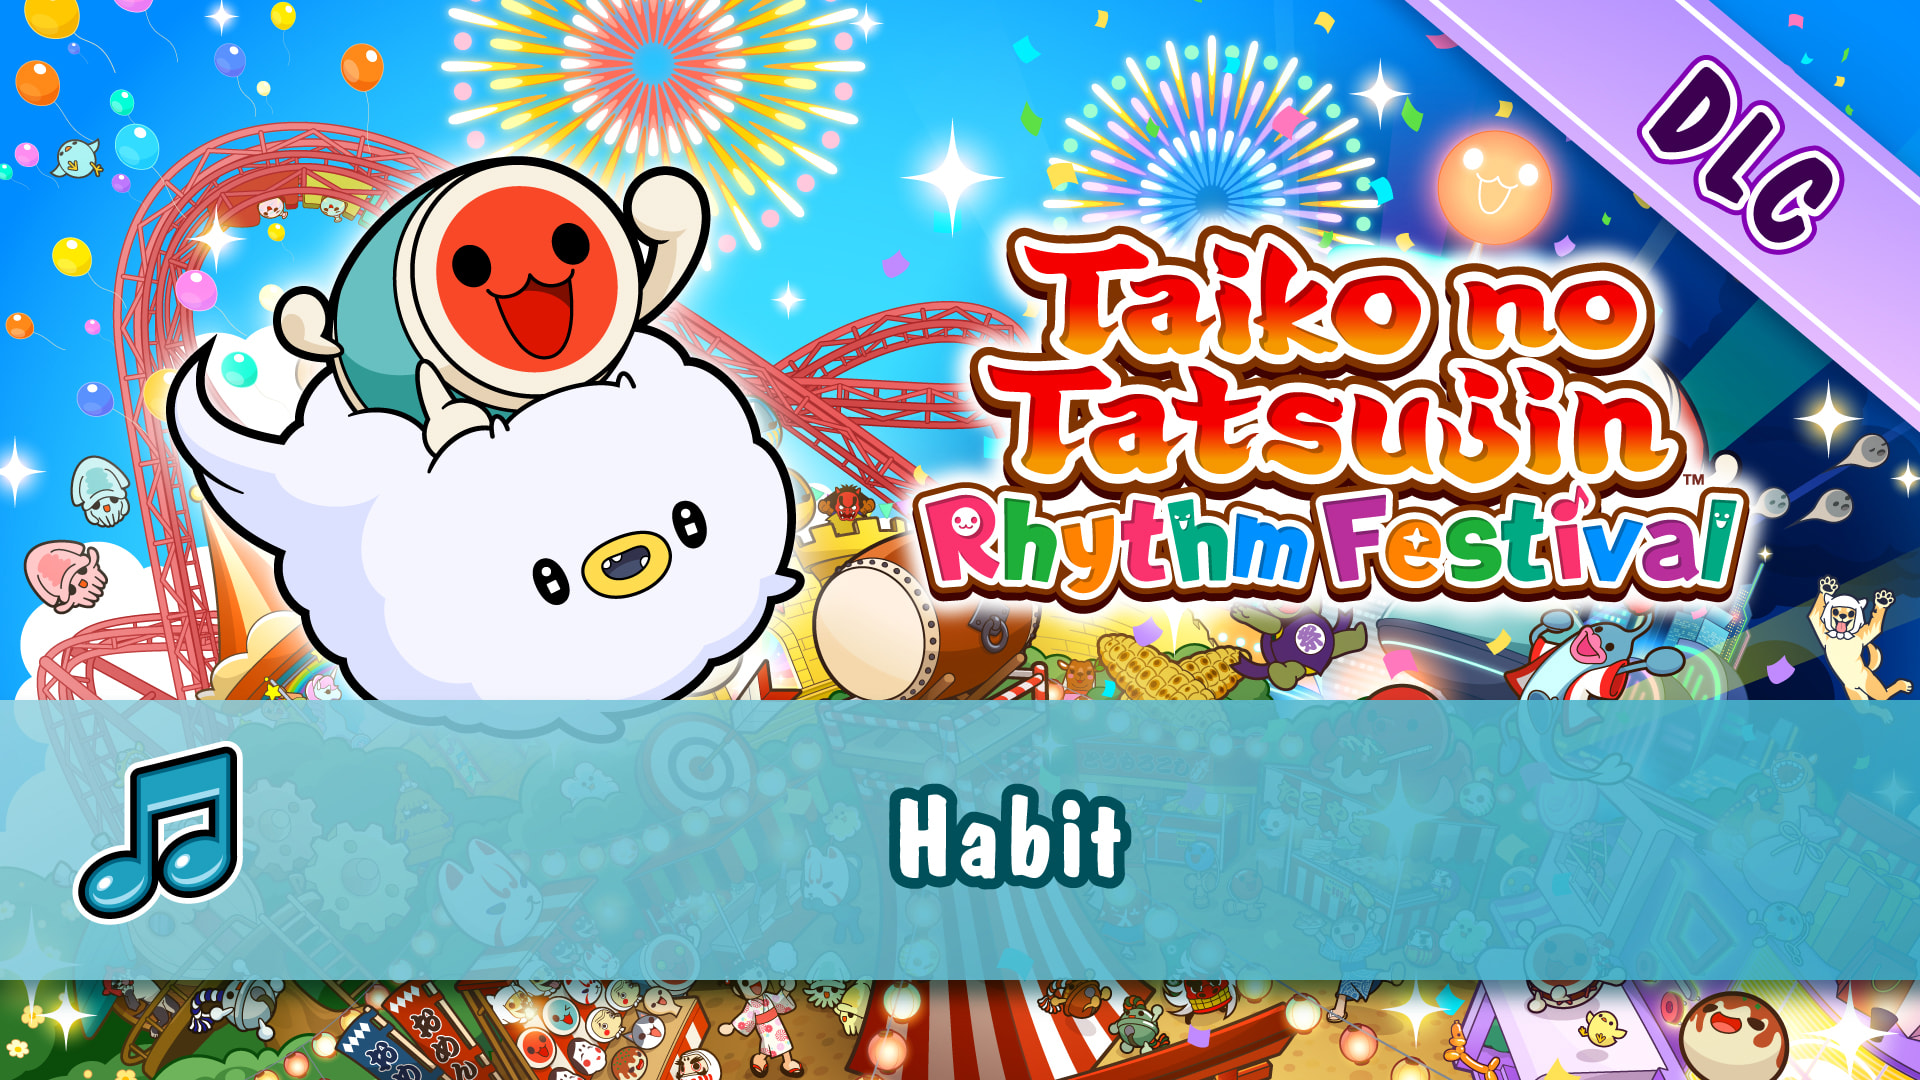 Taiko no Tatsujin: Rhythm Festival - Habit